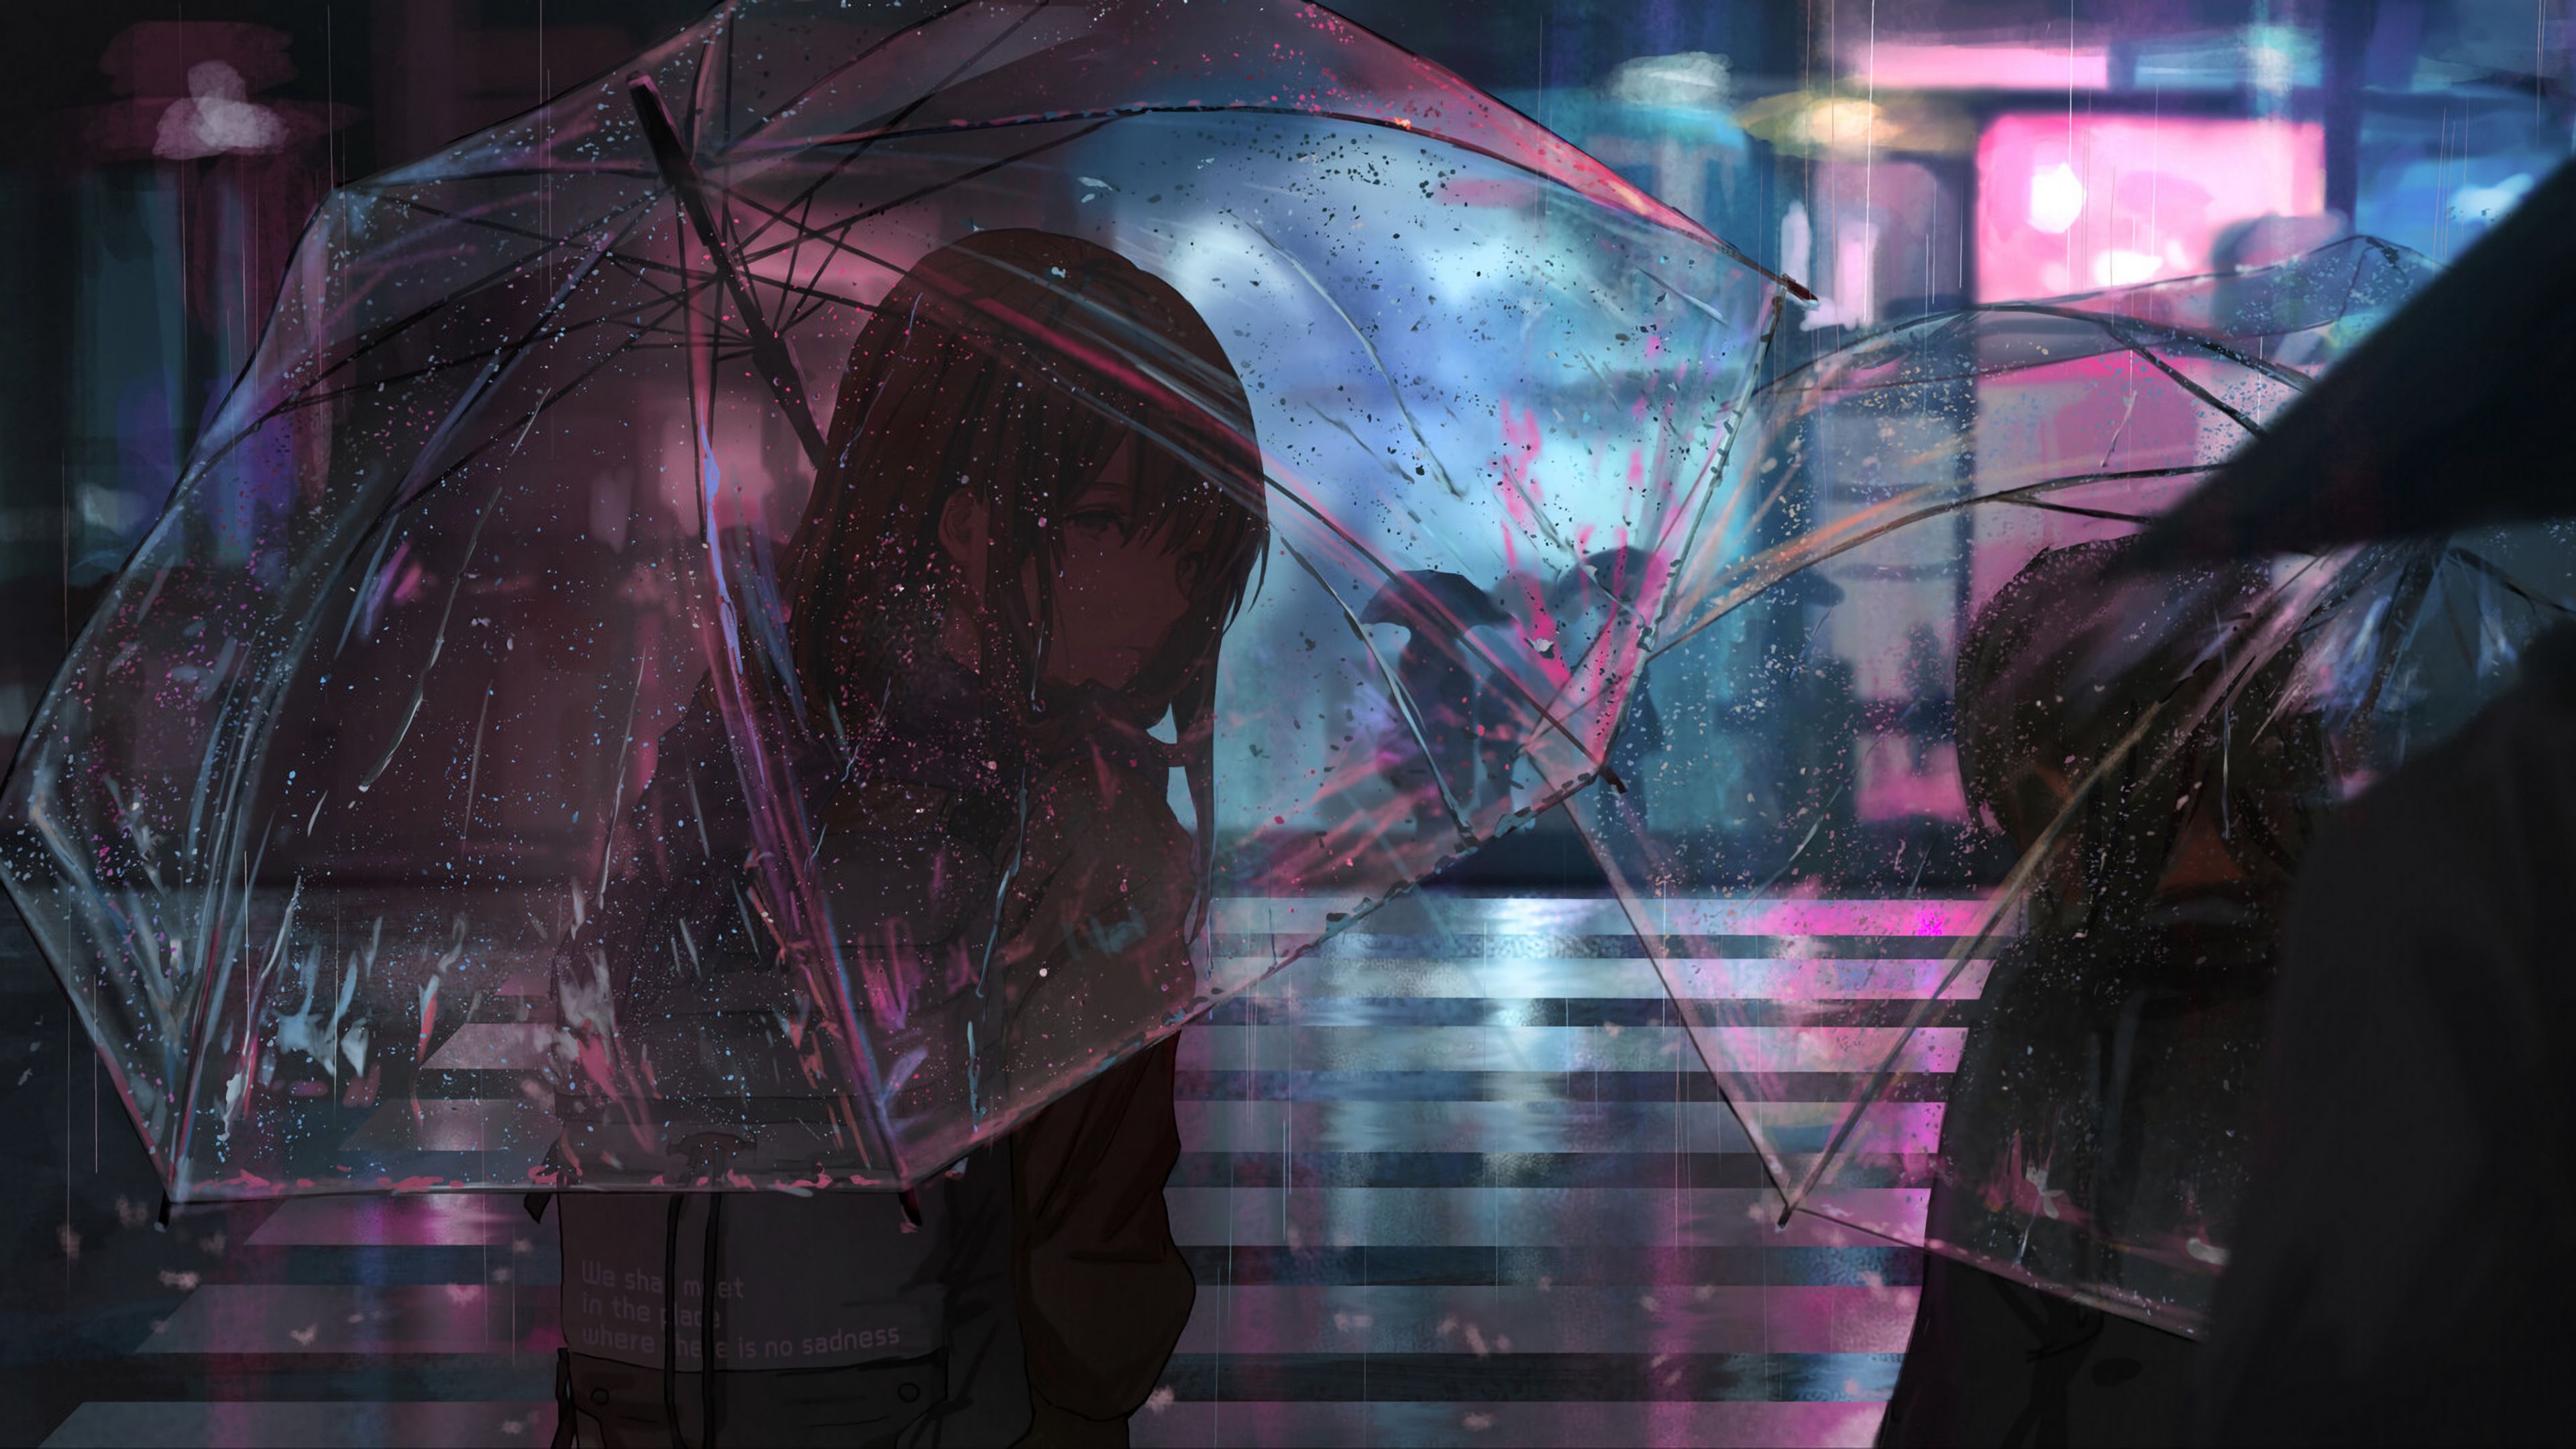 A couple of people holding umbrellas in the rain - Rain